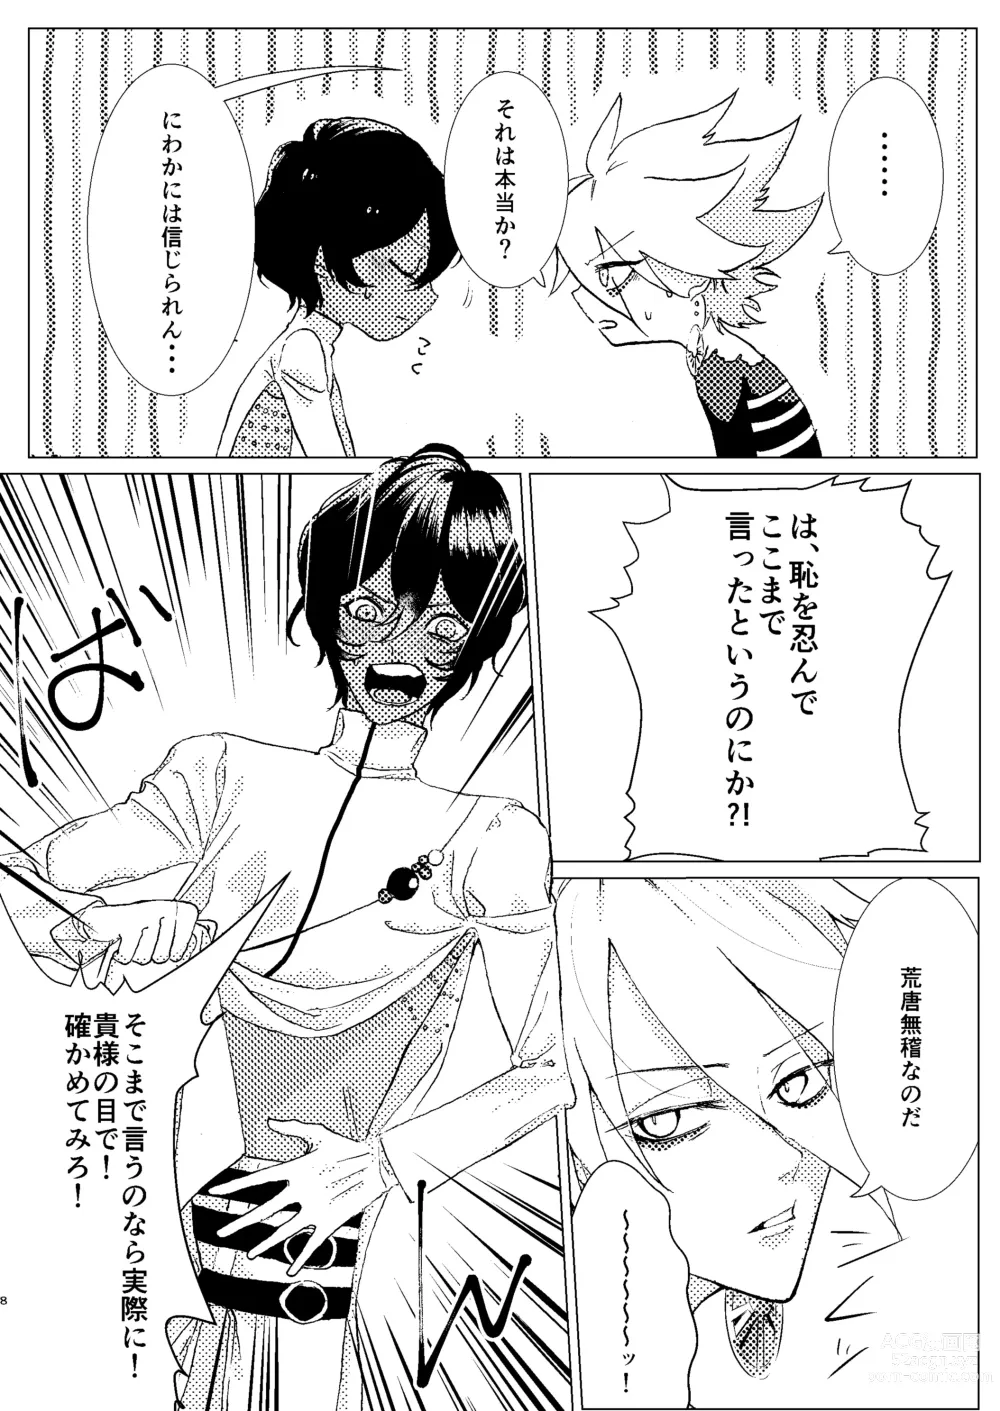 Page 7 of doujinshi honeydew nightmare